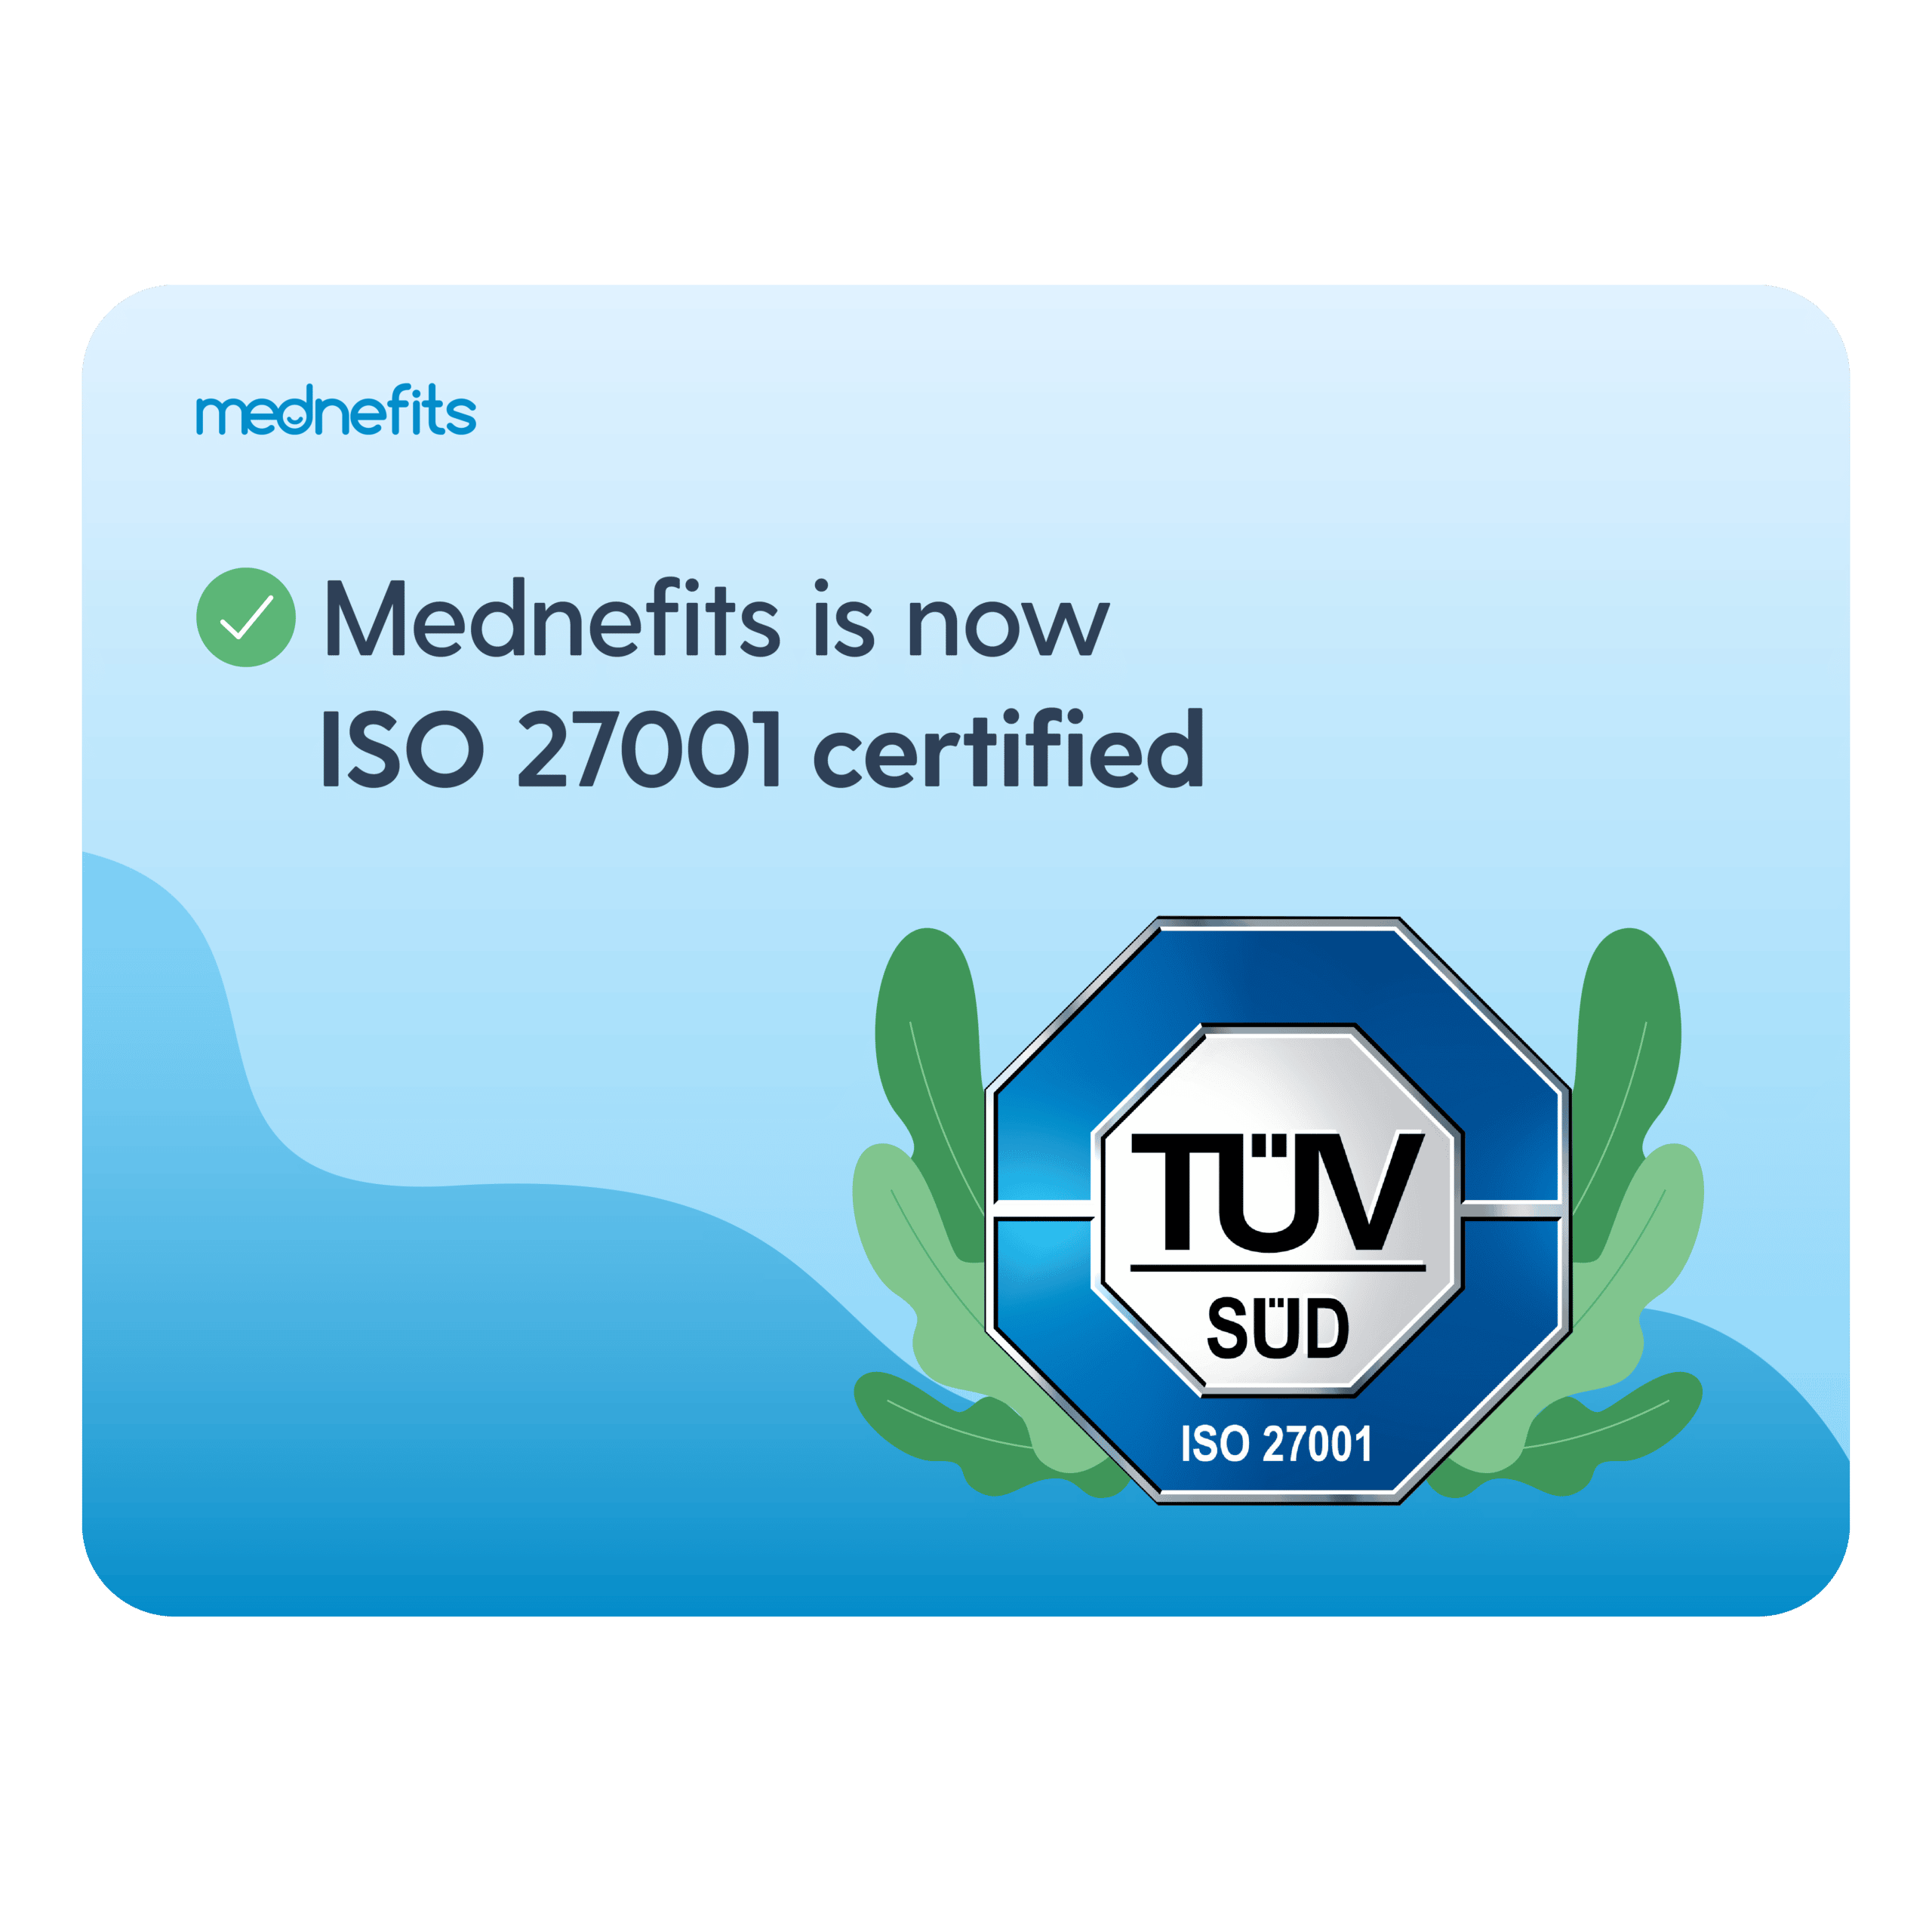 Mednefits is ISO 27001 certified